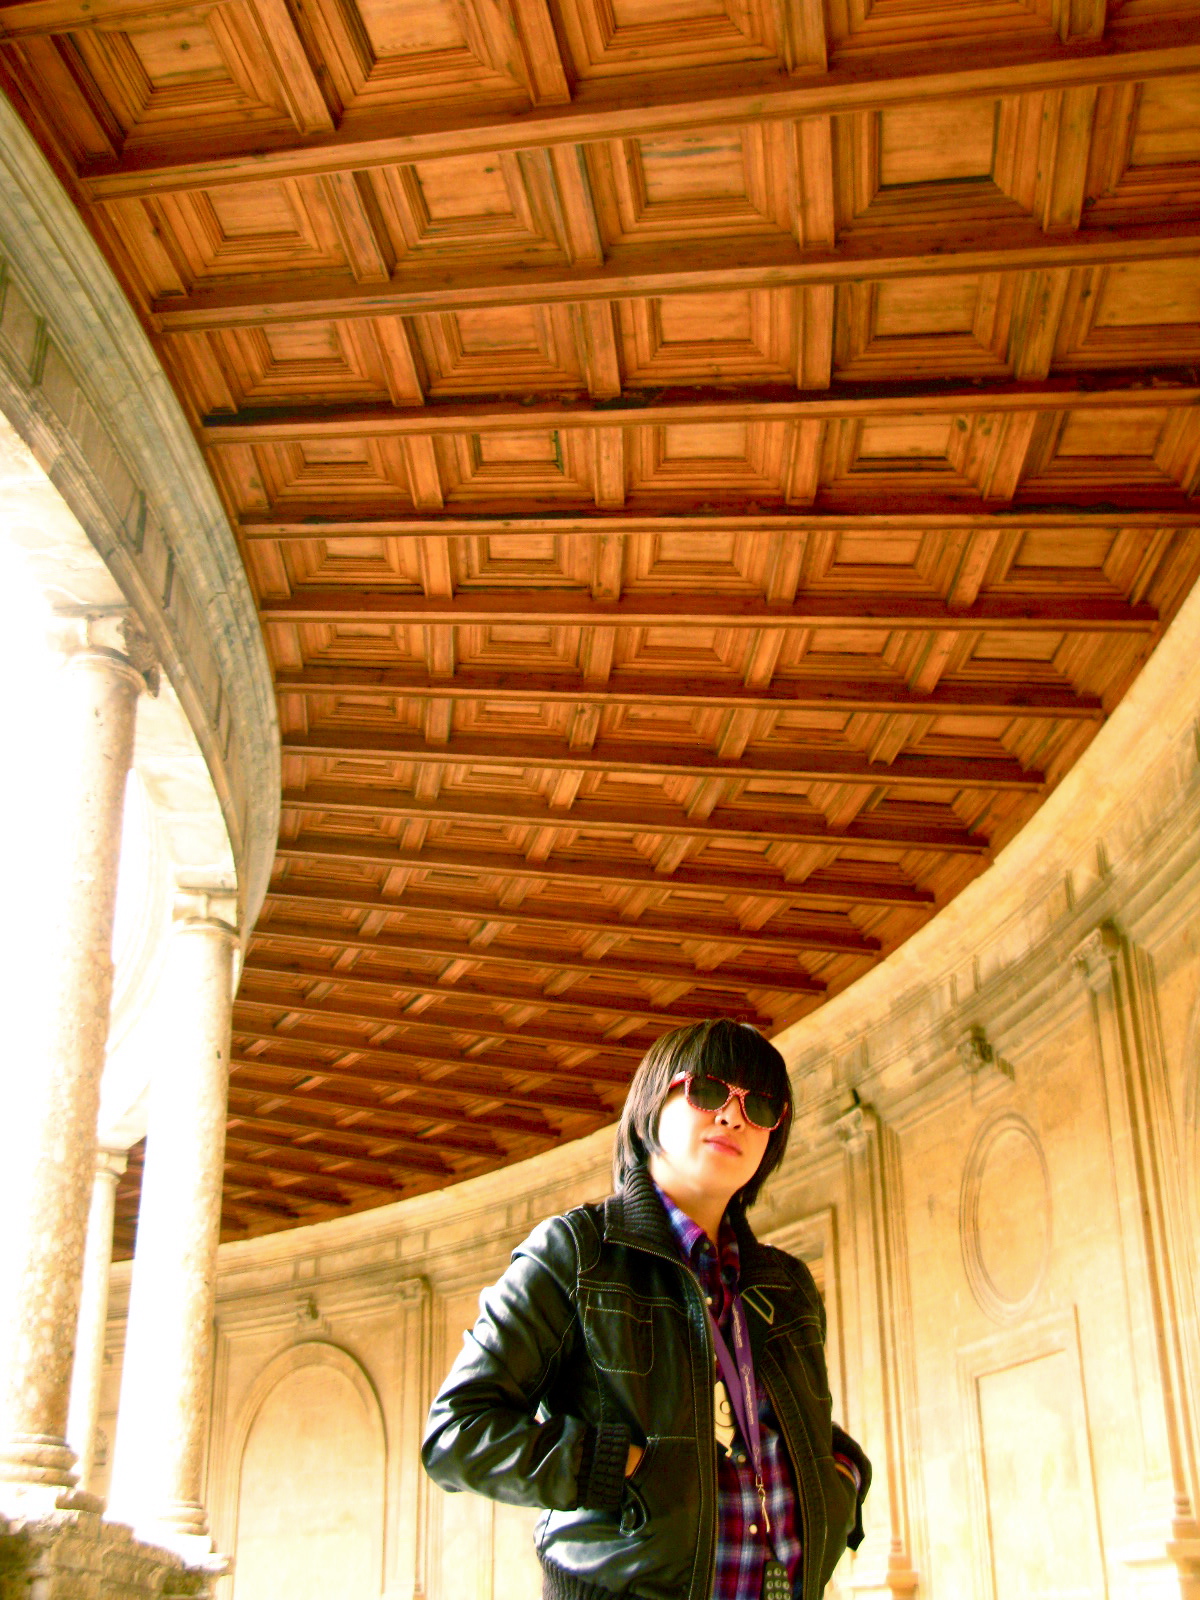 2010 at the Prince Carlos Castle, Granada.